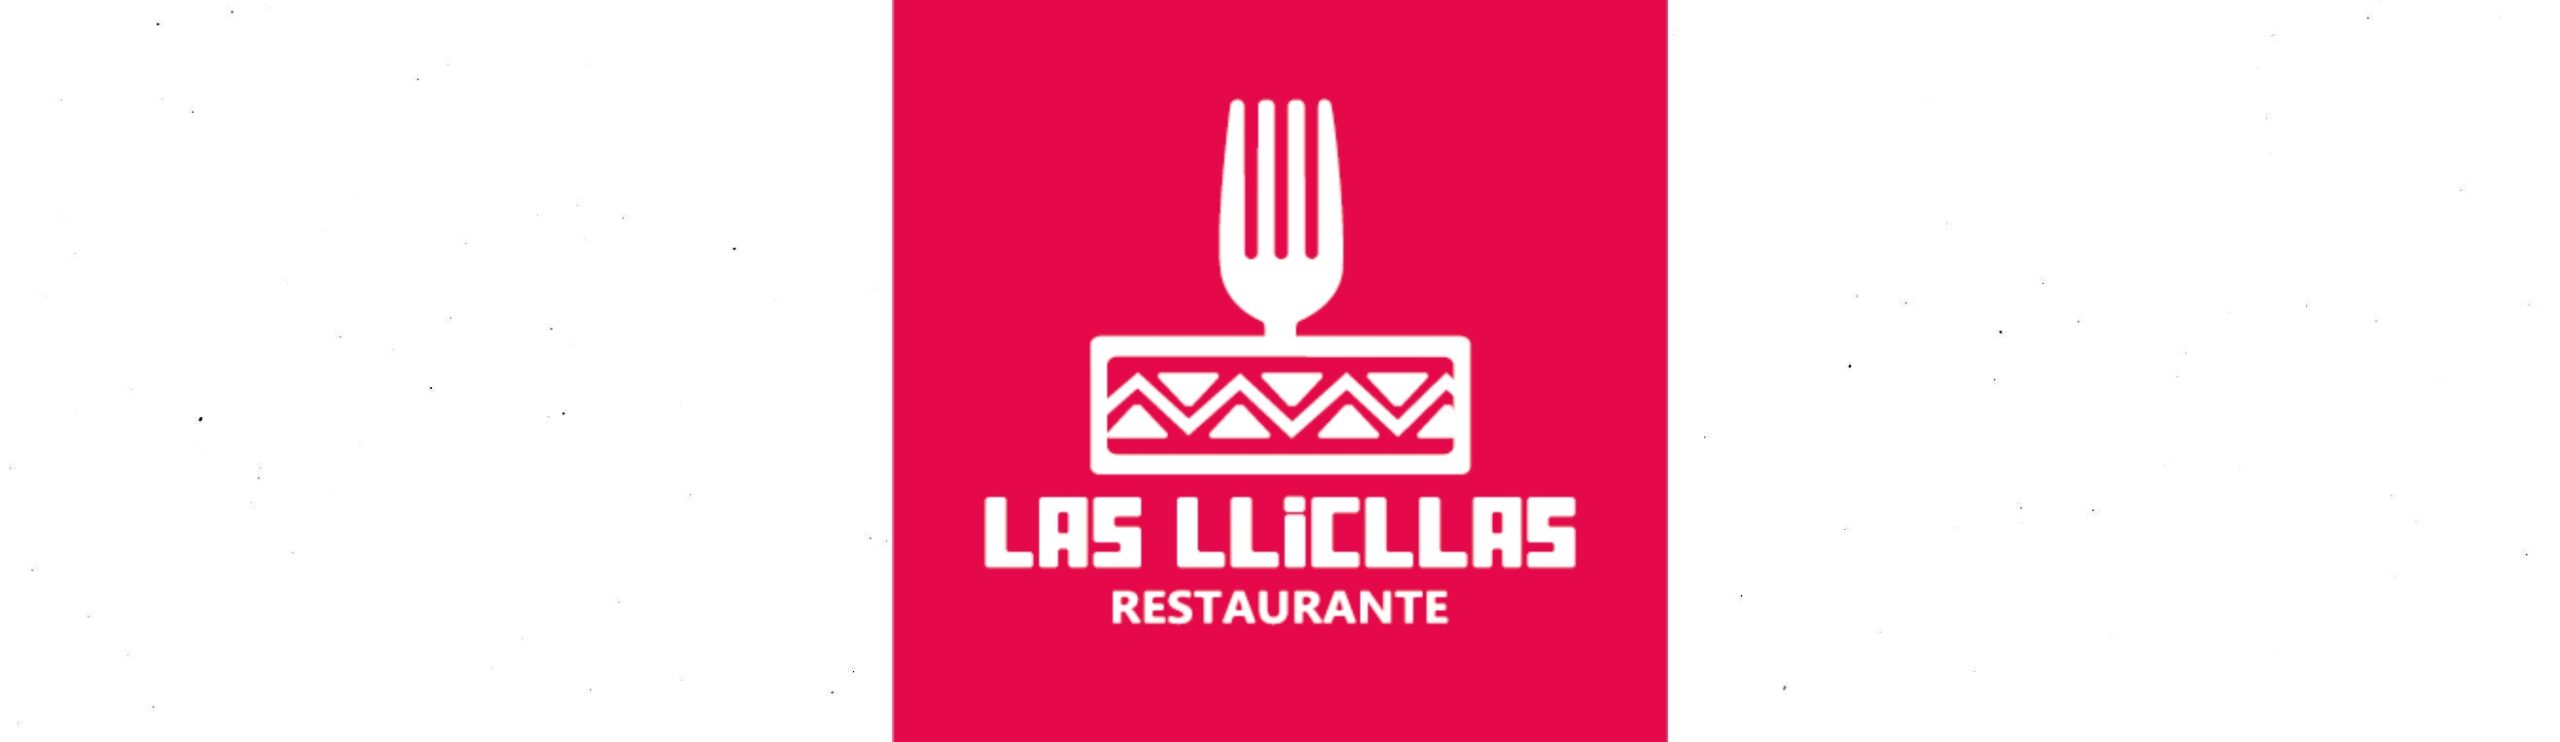 Restaurant Turístico Llicllas